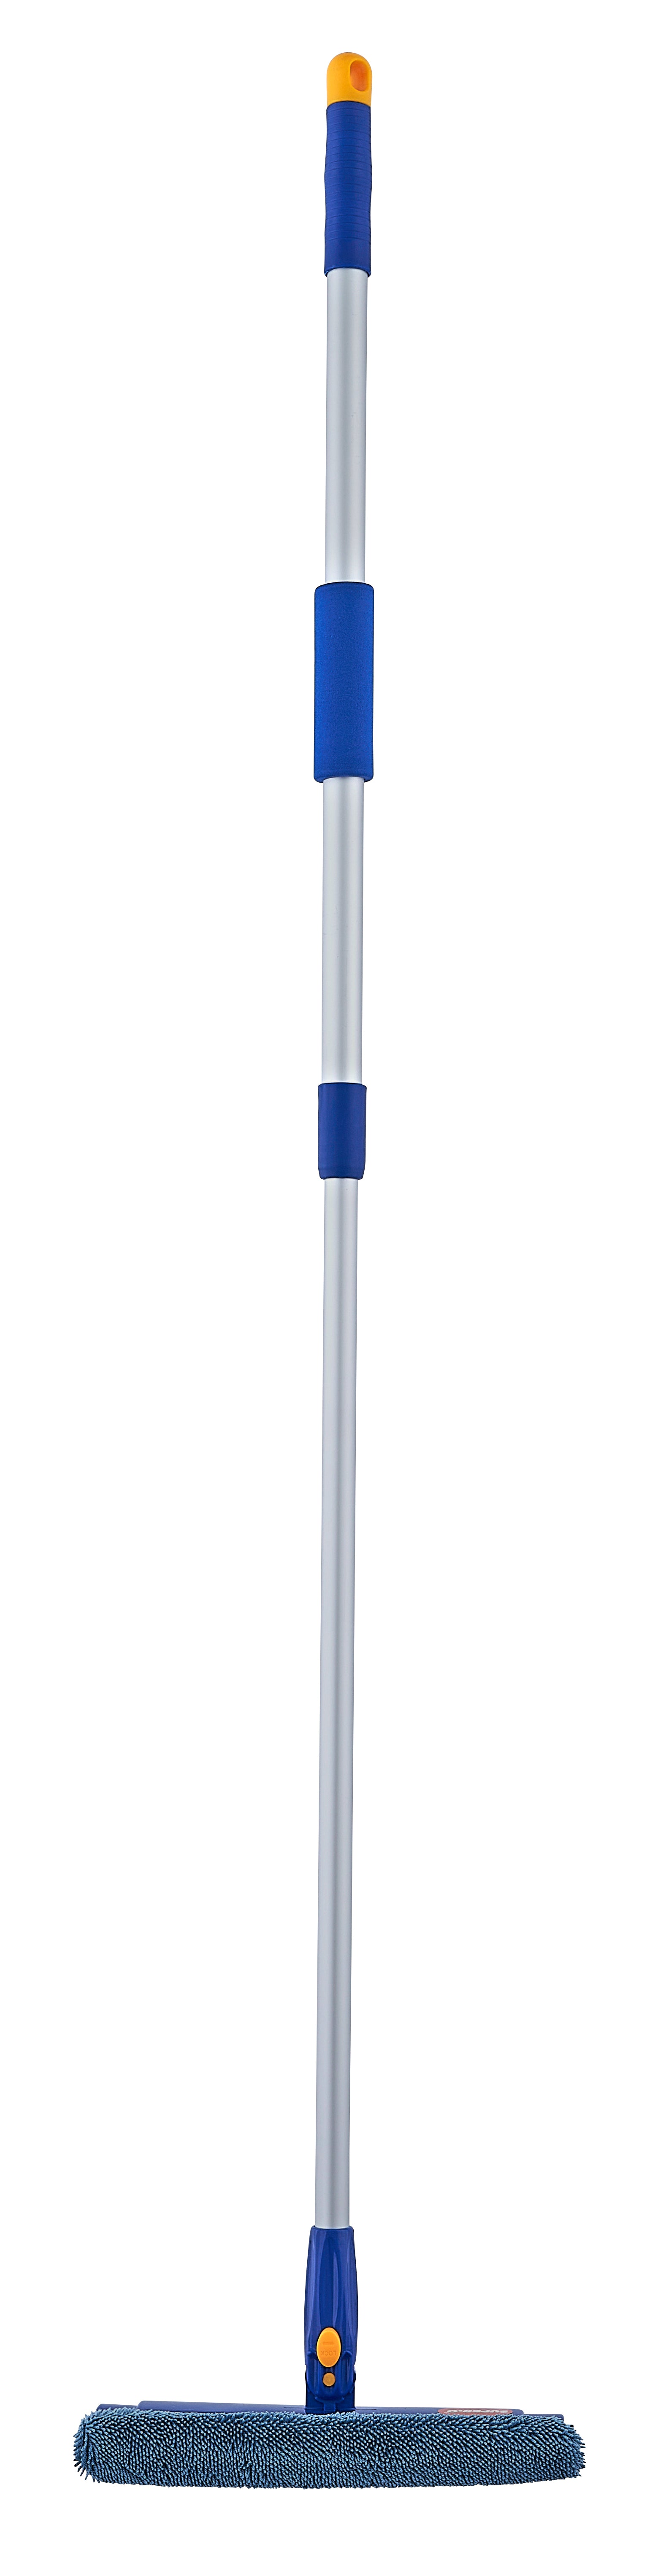 AUKEPO Super Flexible Silicone Squeegee, Window Tint Water Blade